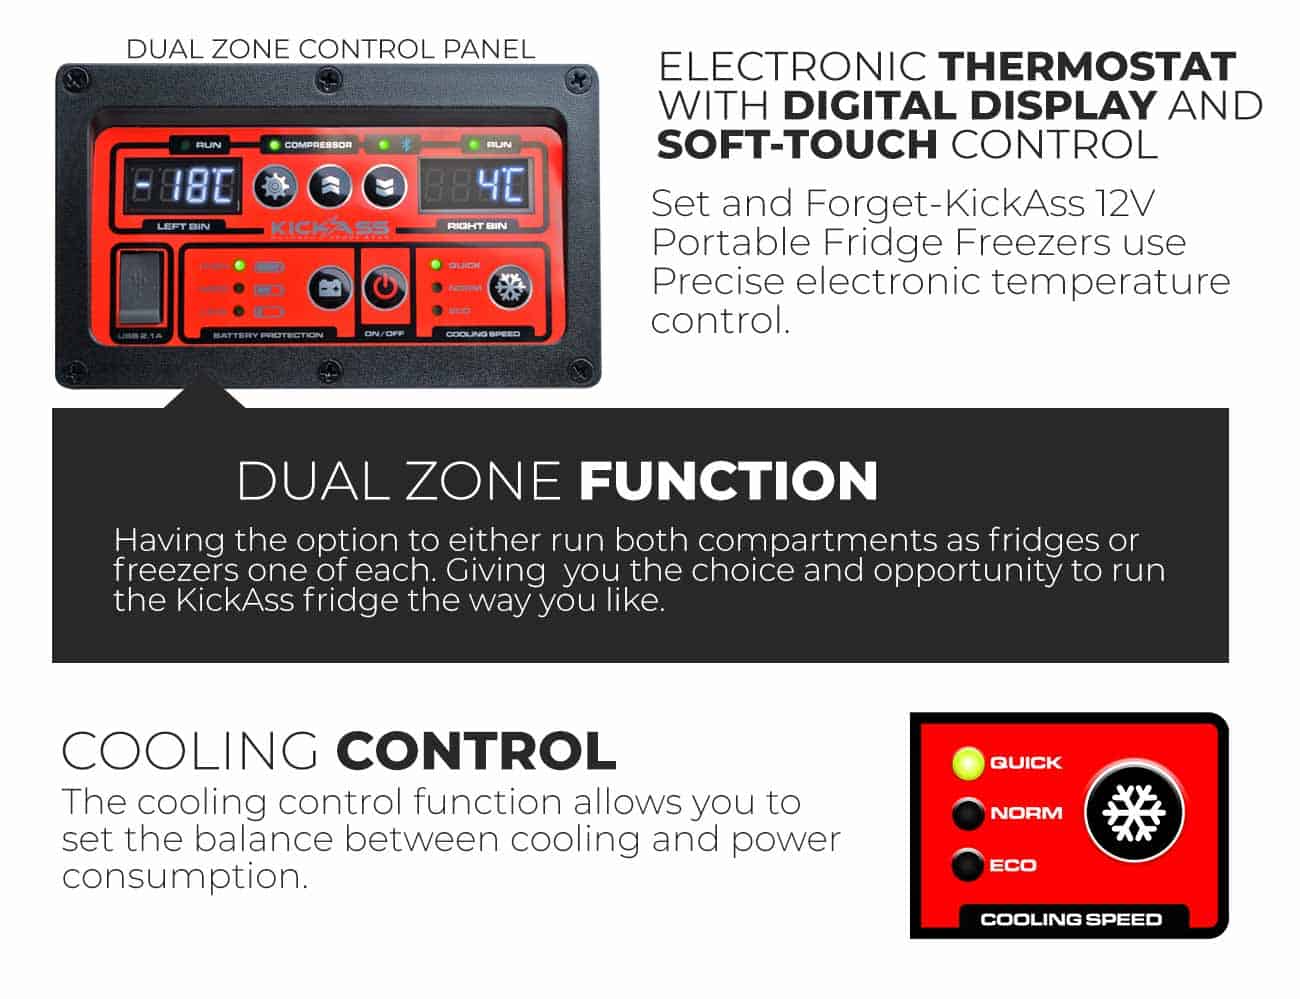 Dual zone control panel